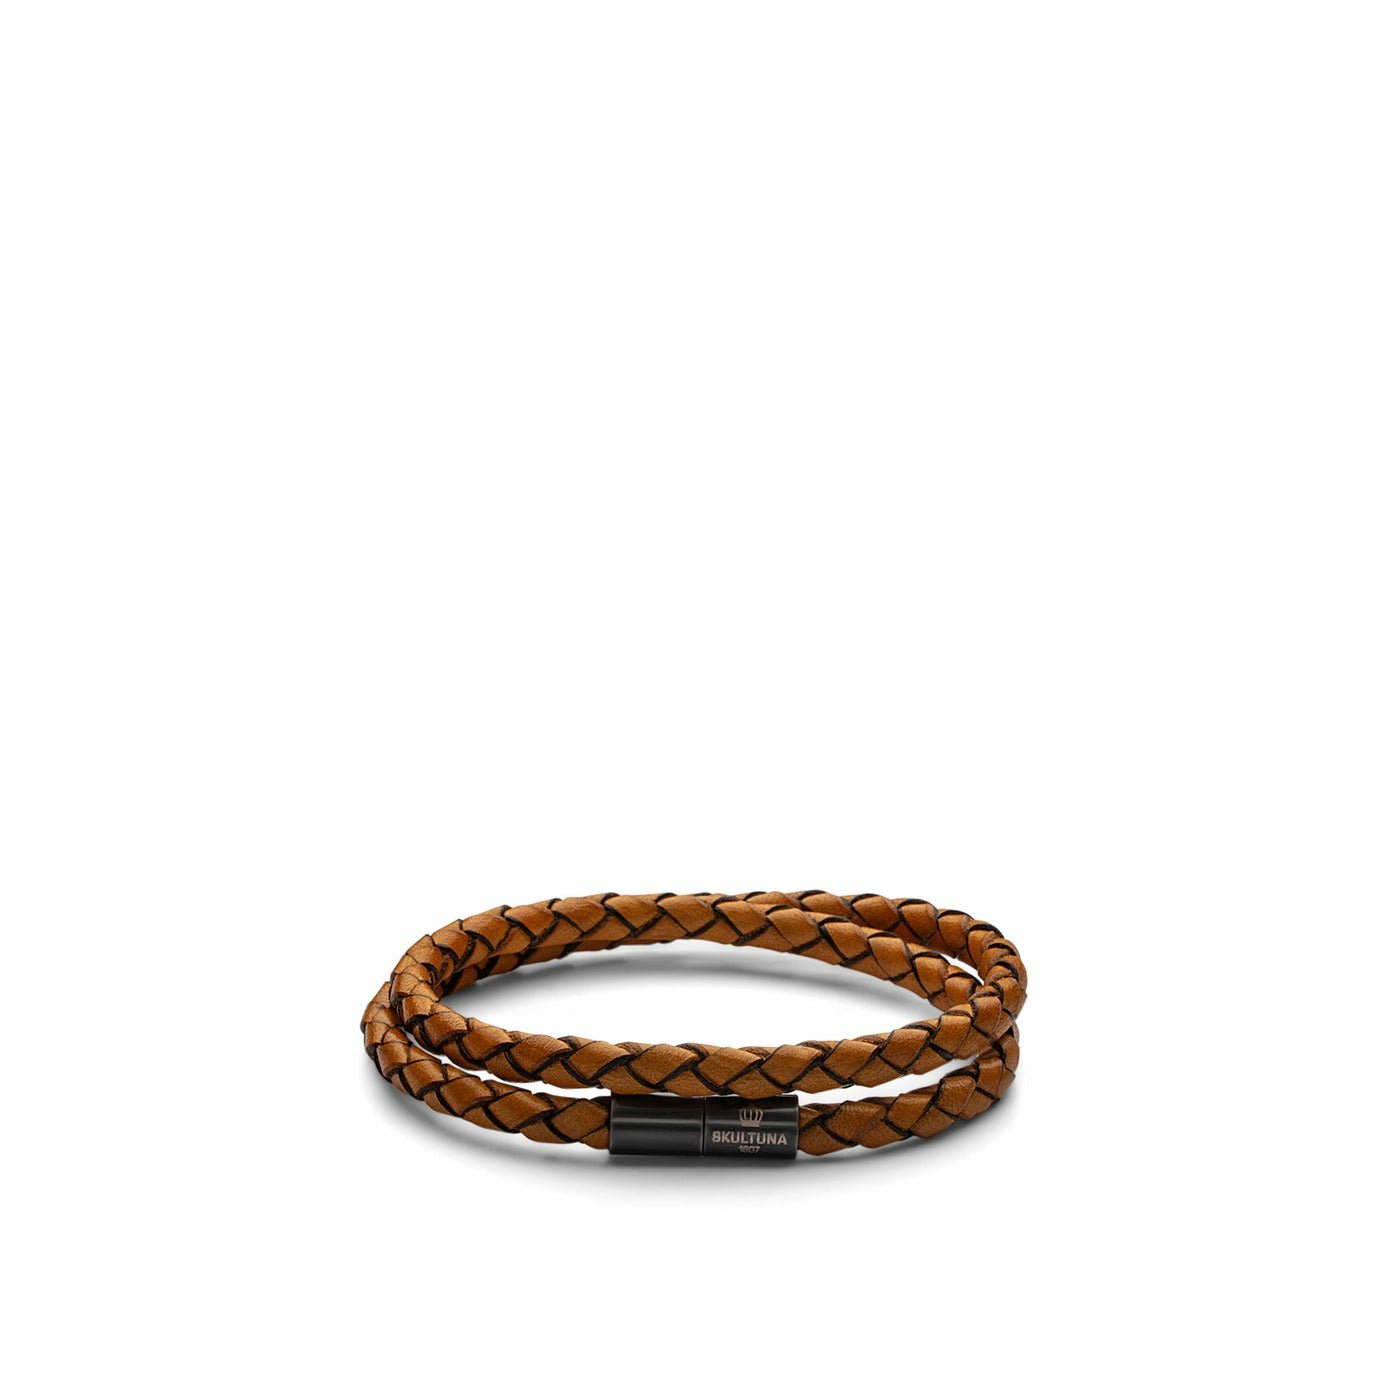 Skultuna Het stealth -armbandmedium Ø16,5 cm, bruin